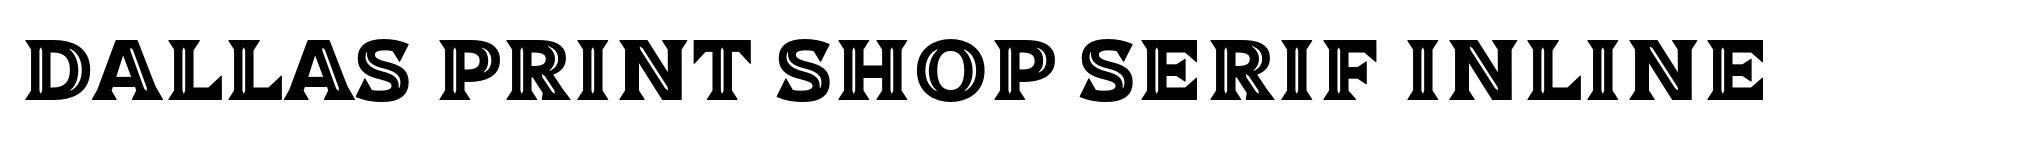 Dallas Print Shop Serif Inline image